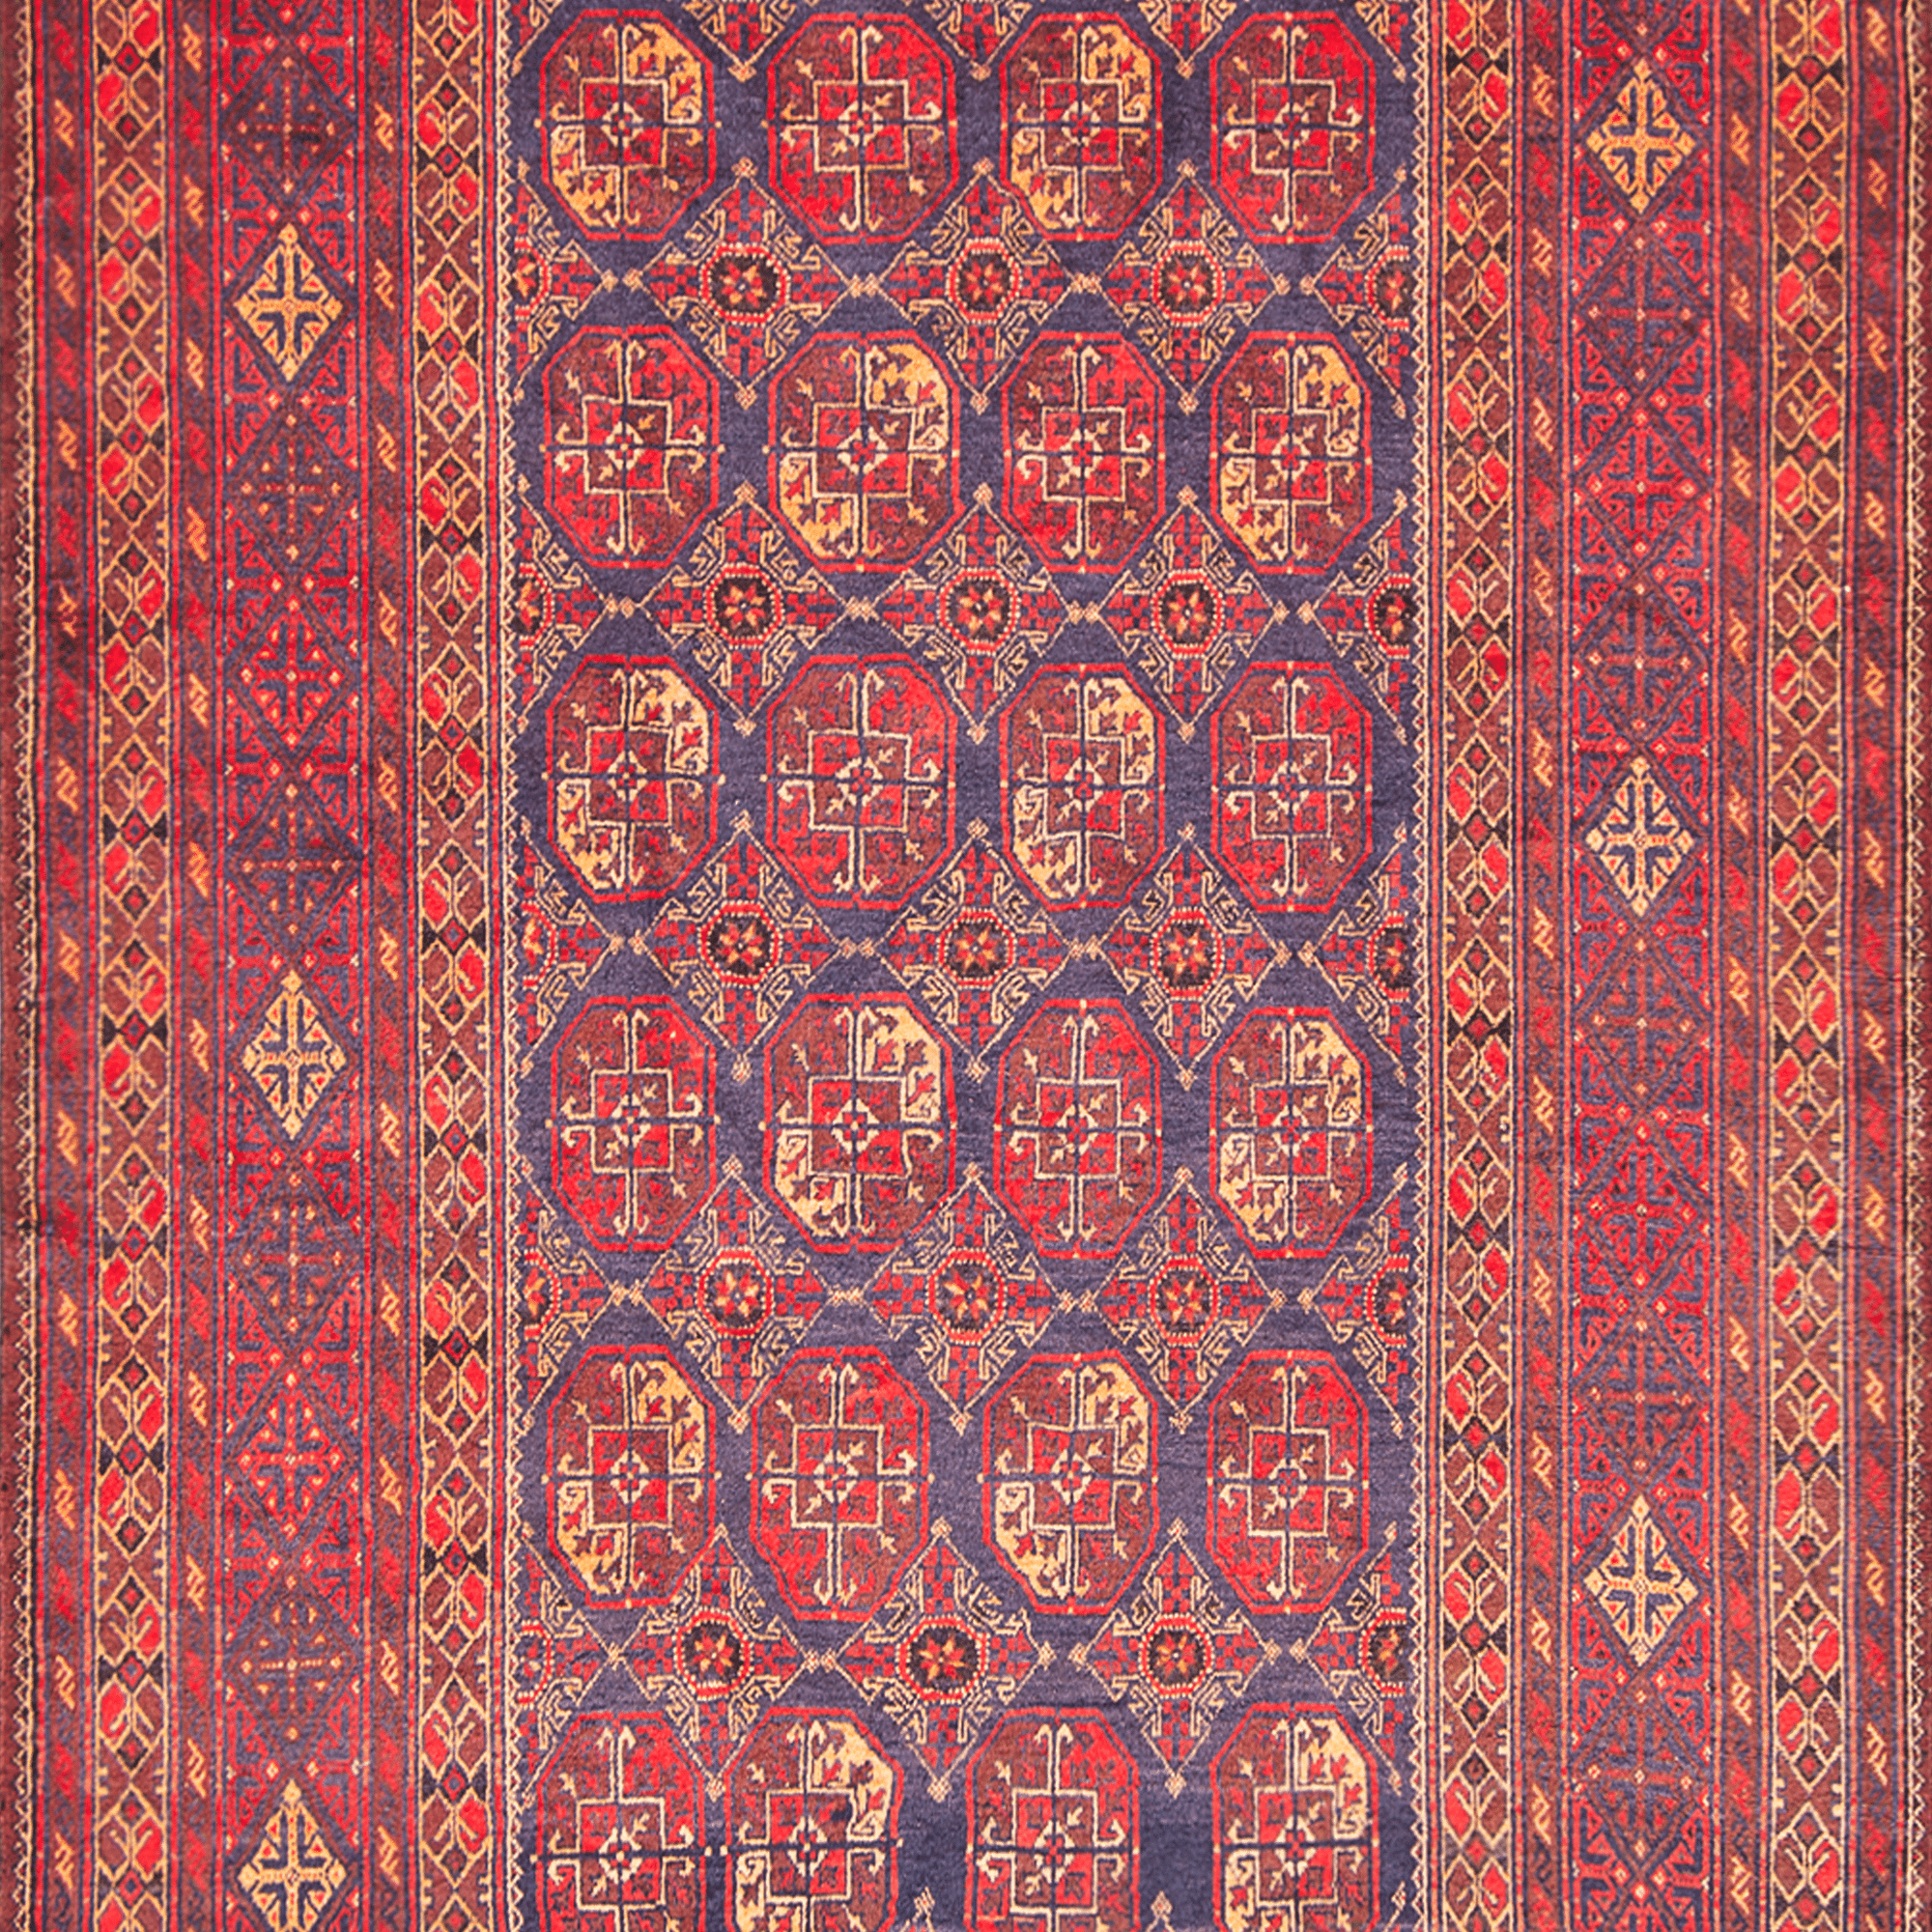 Fine Hand-knotted Baluchi Tribal Wool Rug 216cm x 383cm